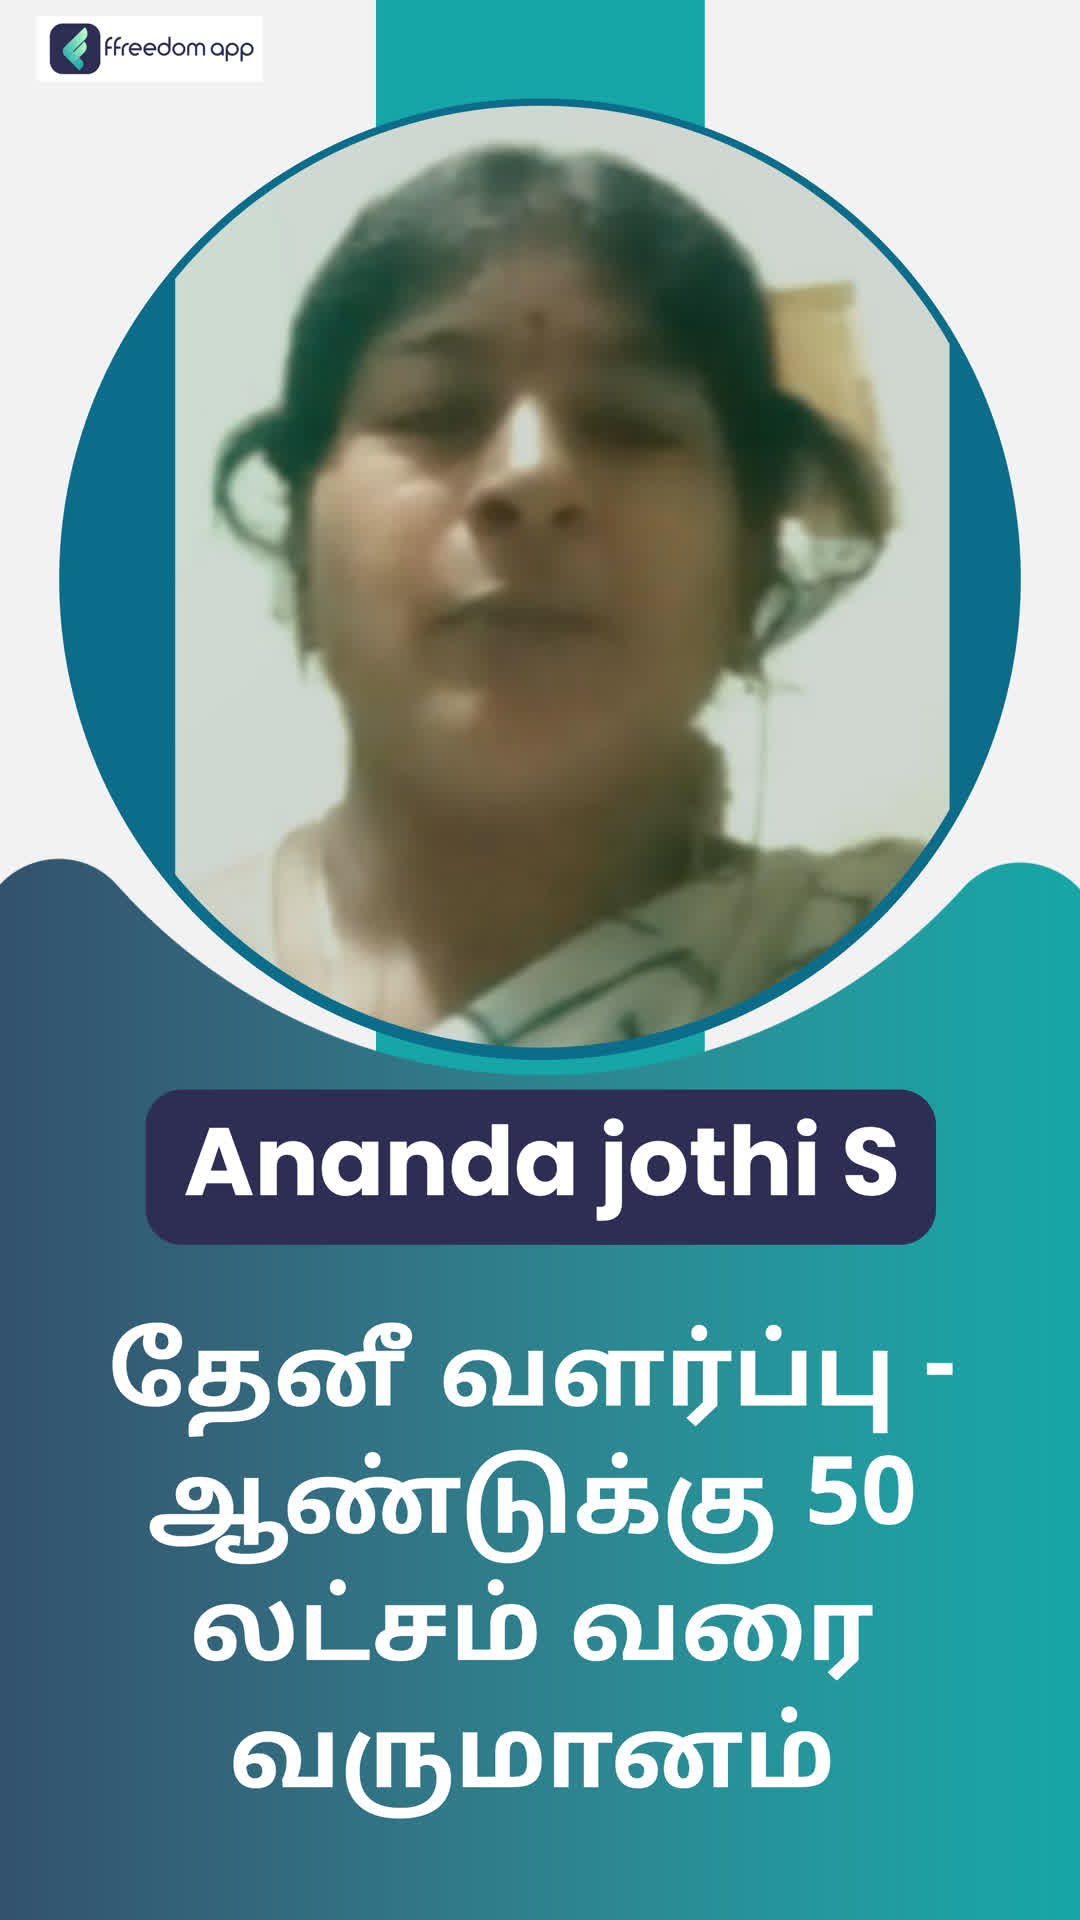 Ananda jothi S's Honest Review of ffreedom app - Theni ,Tamil Nadu